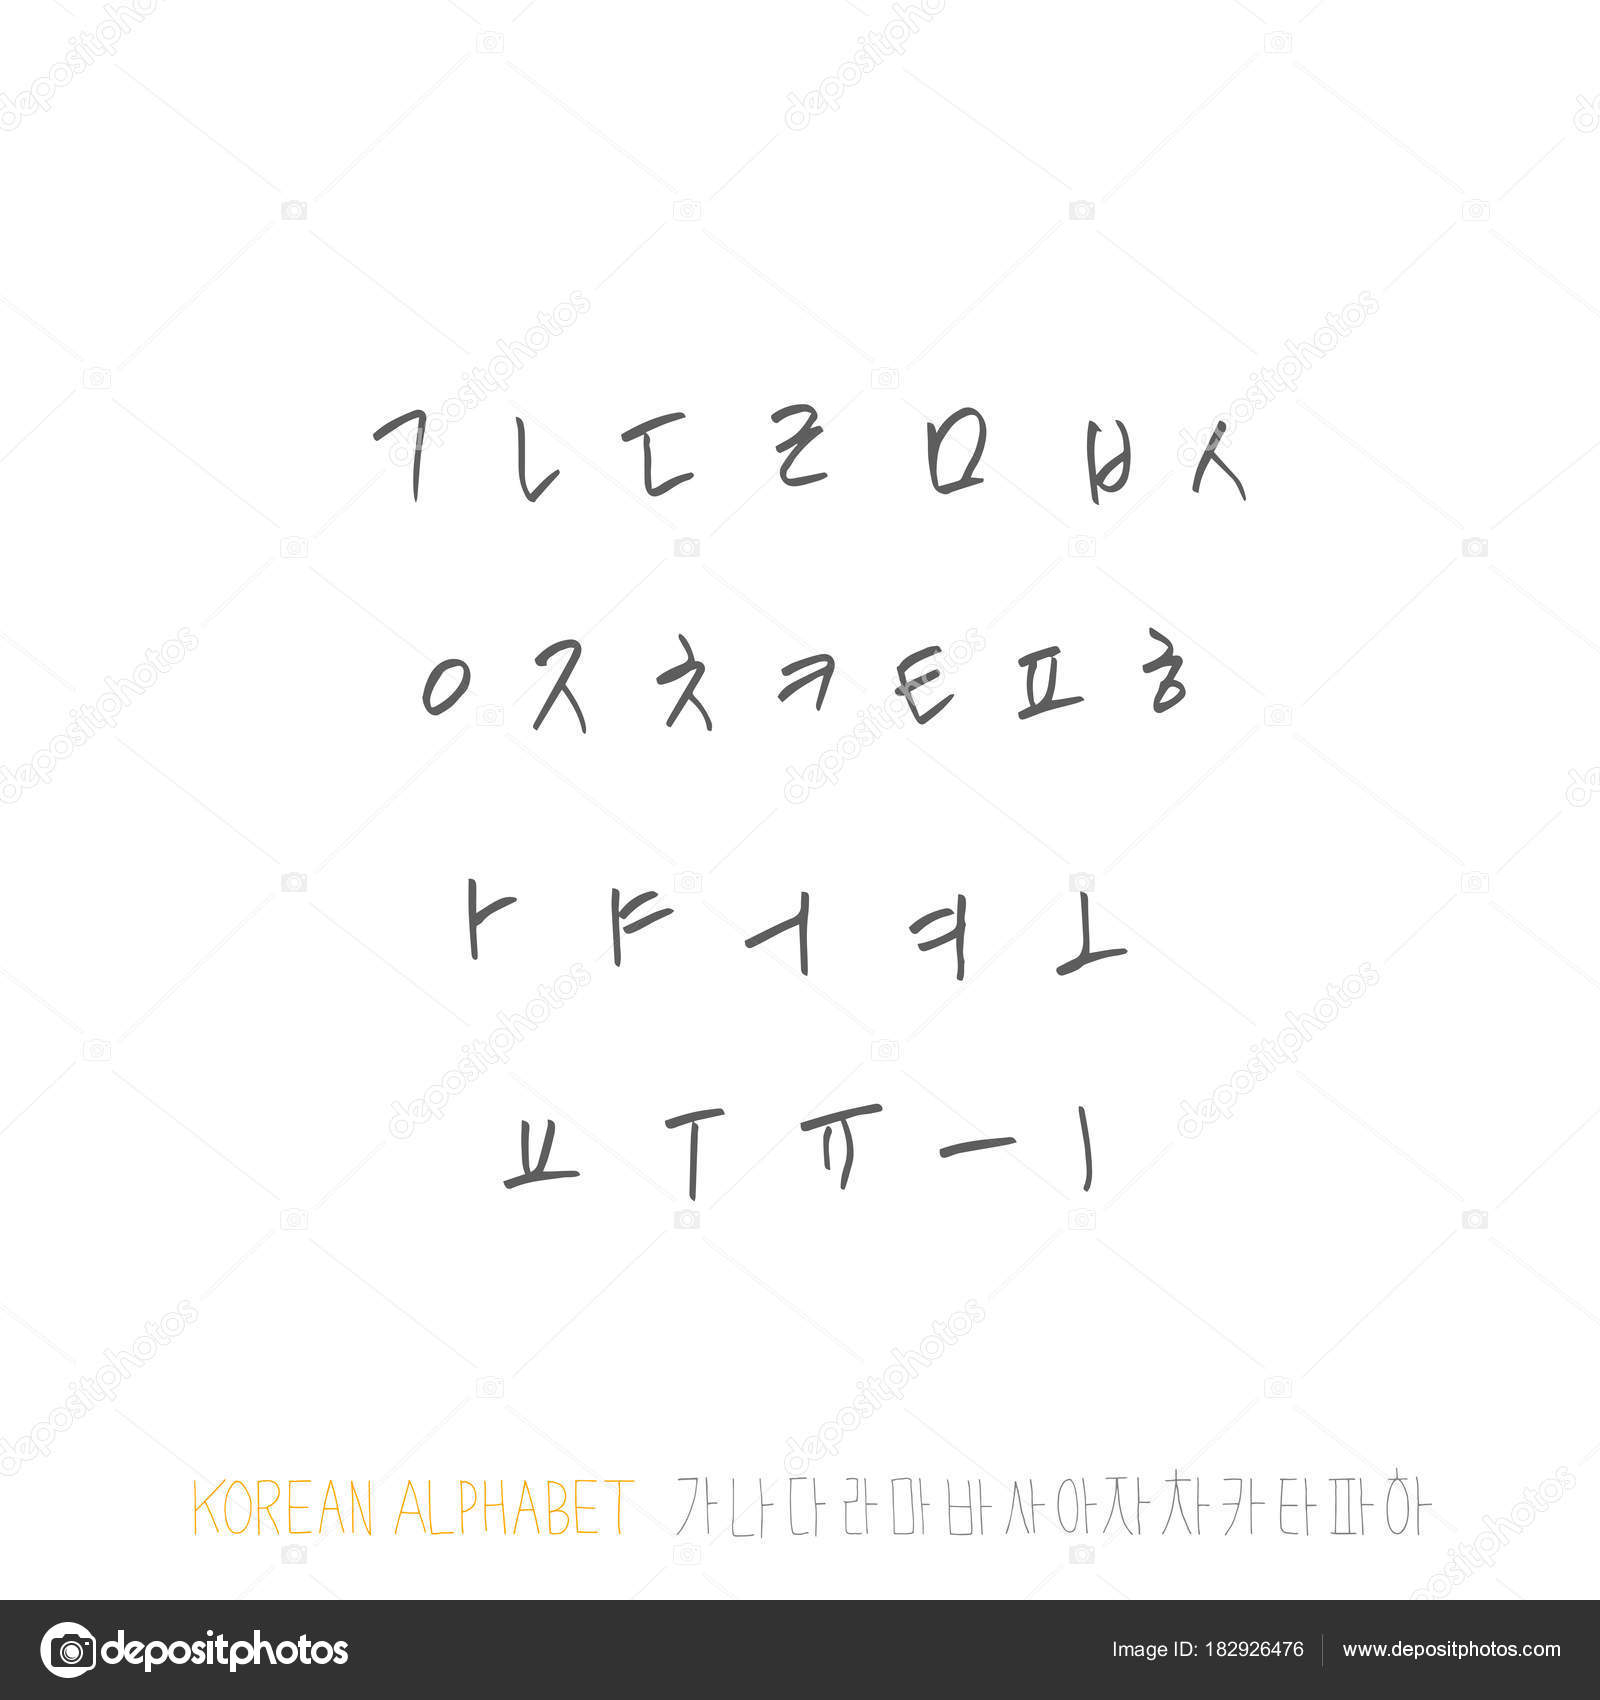 Korean Alphabet / Handwritten Calligraphy 182926476